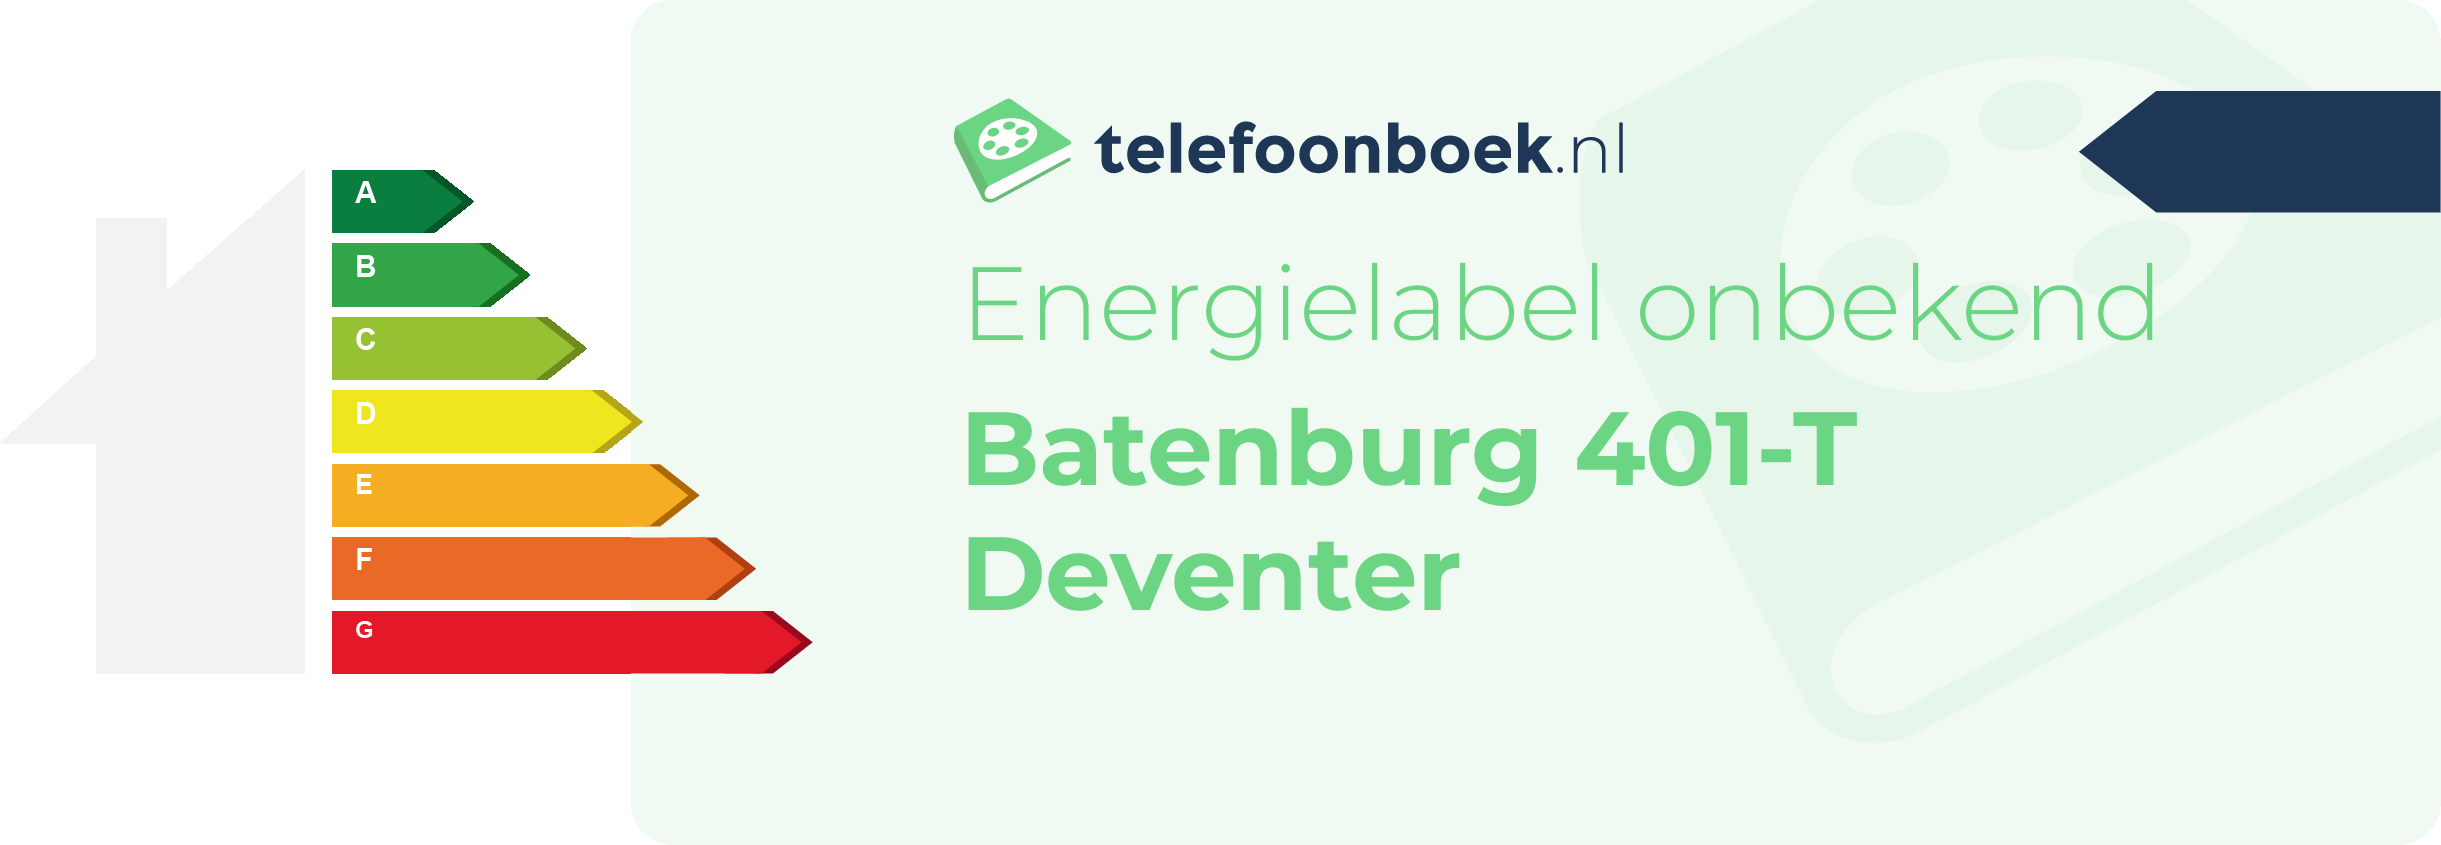 Energielabel Batenburg 401-T Deventer